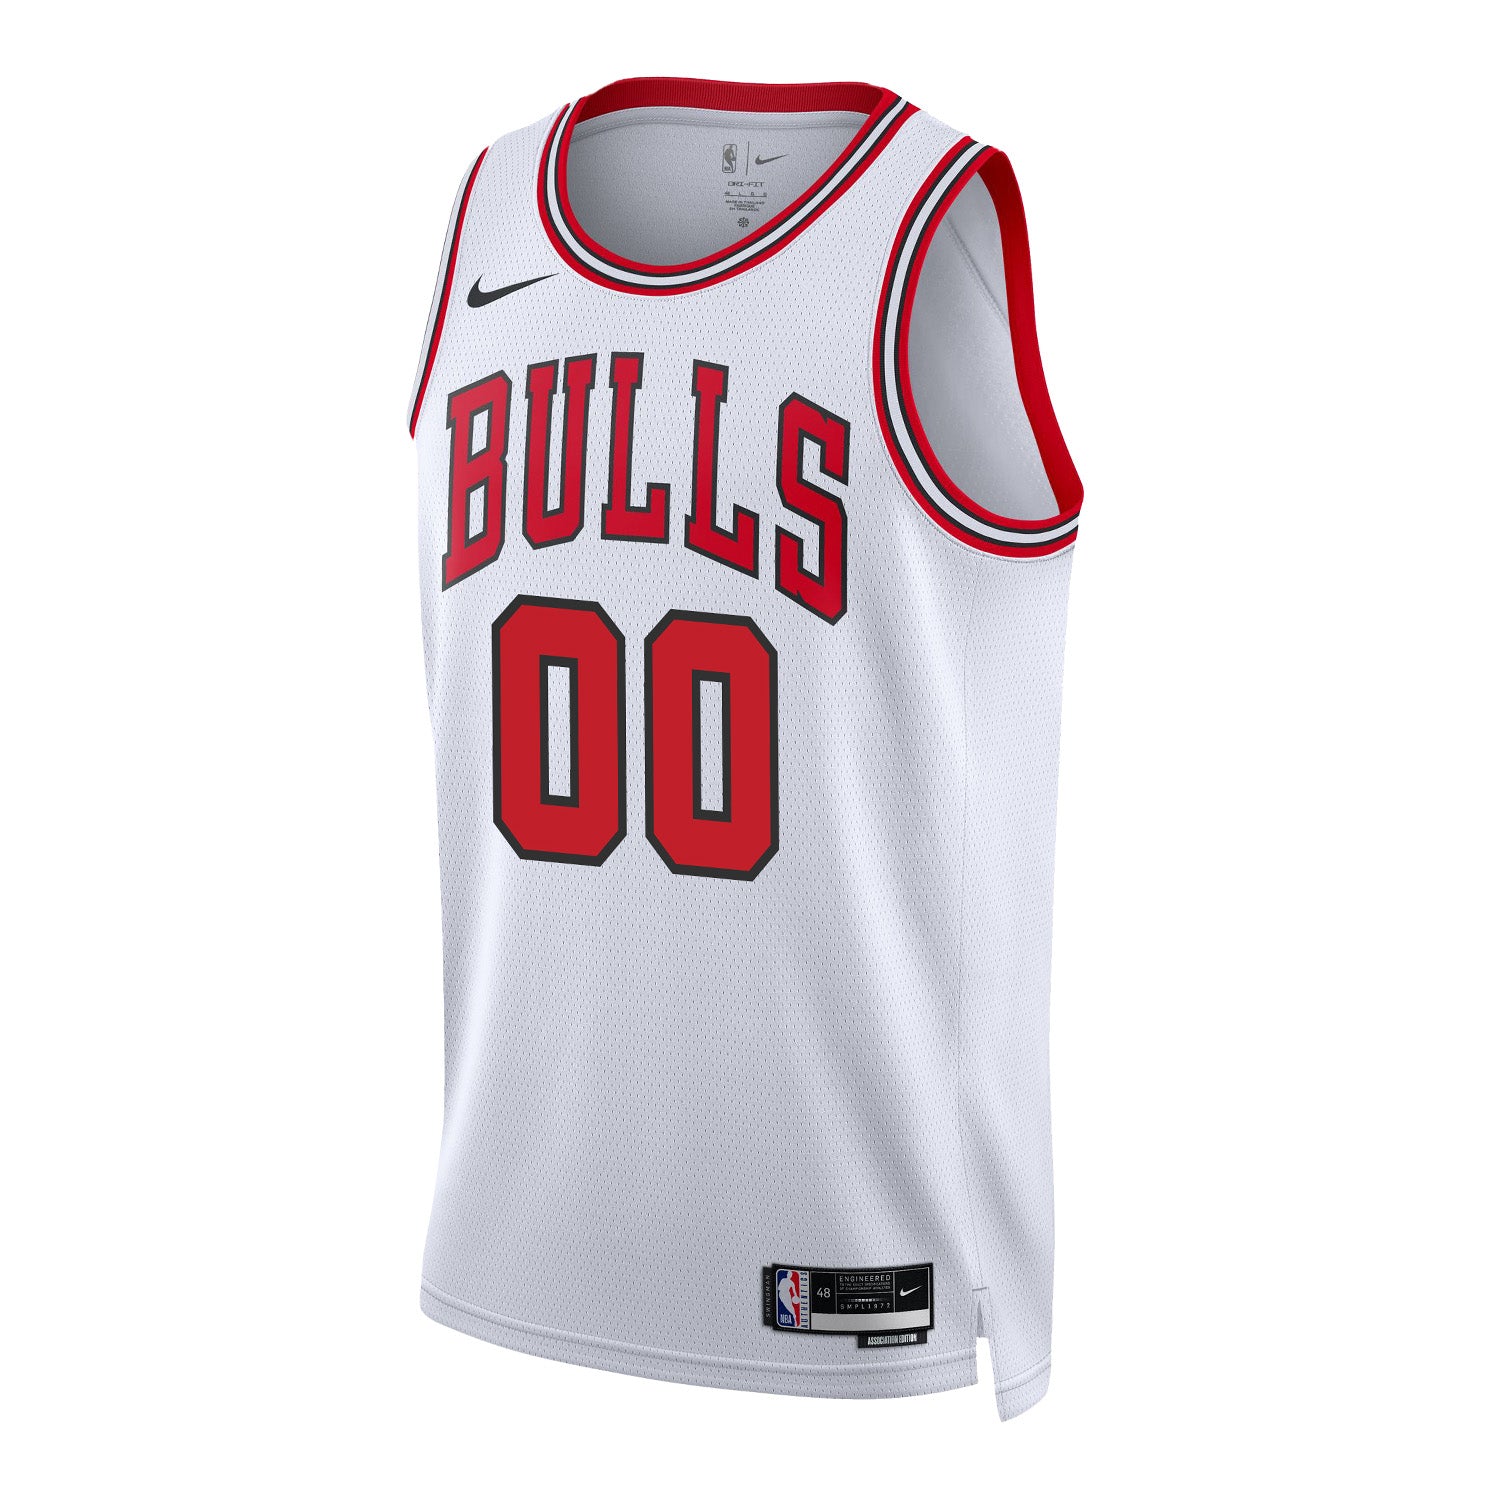 Michael Jordan NBA Nike Chicago Bulls Jersey Black Jersey Red